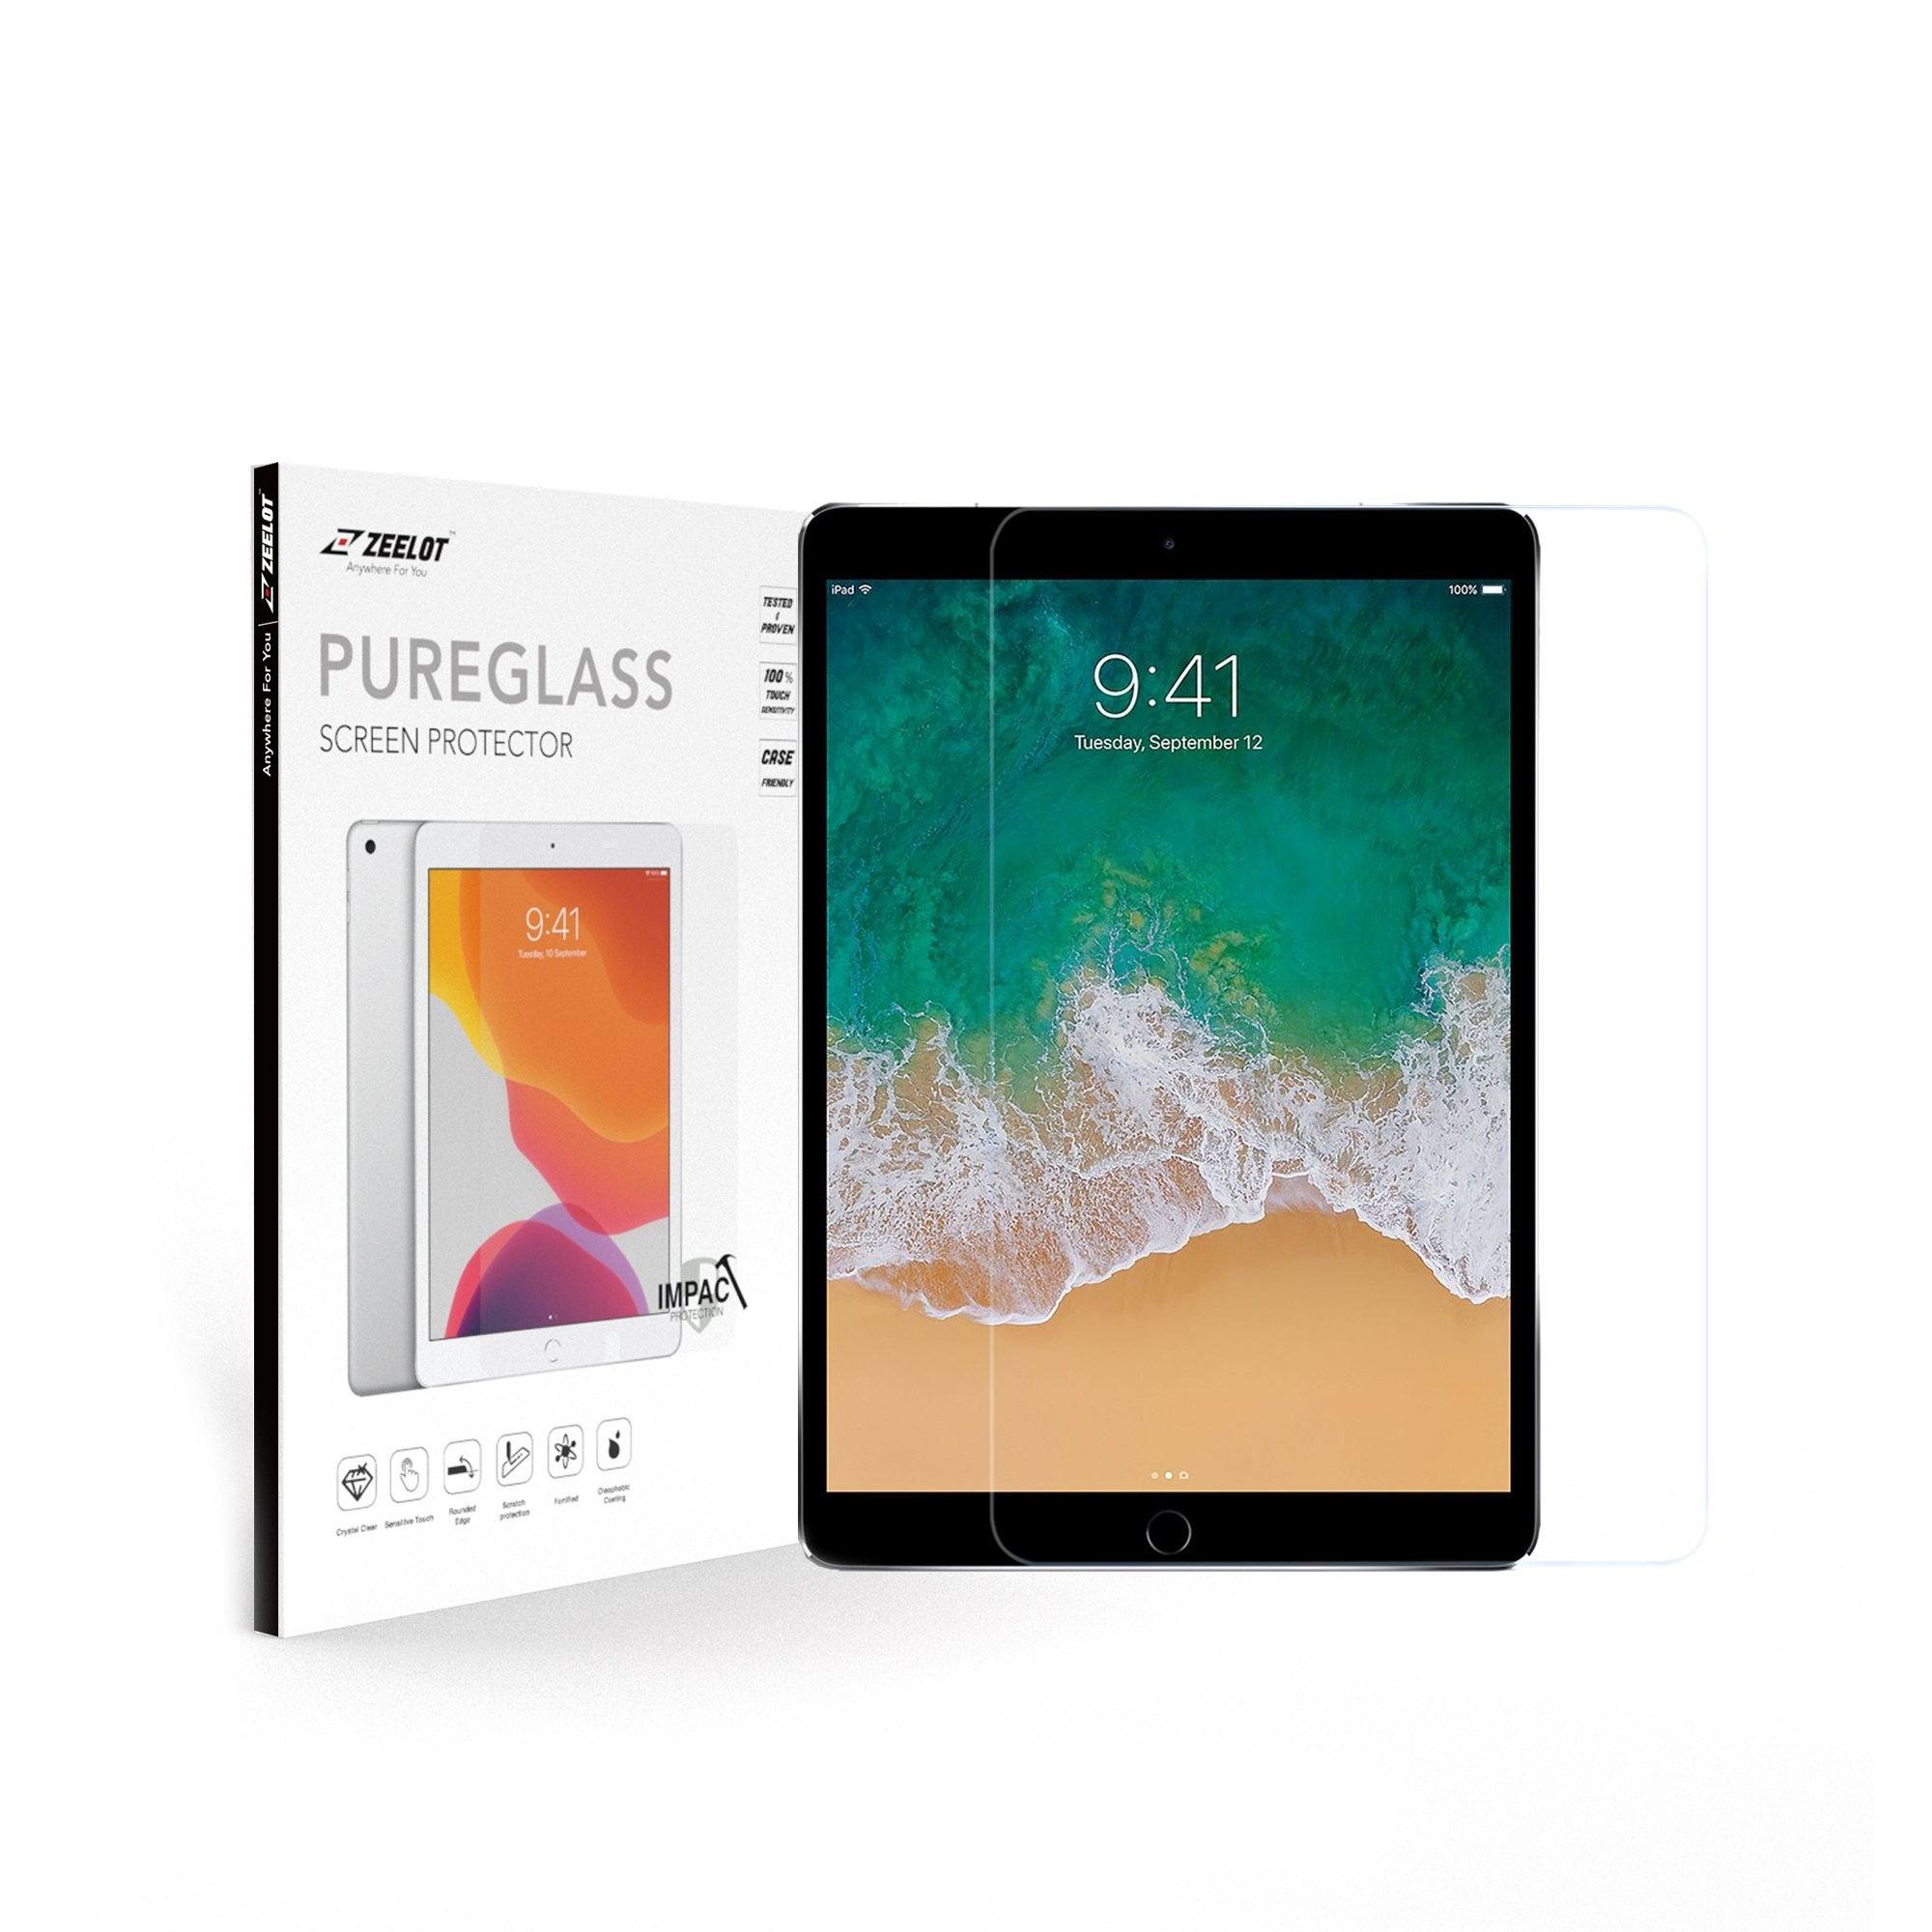 ZEELOT PureGlass 2.5D Tempered Glass Screen Protector for iPad Air/Pro 10.5" (2019/2017), Clear Tempered Glass ZEELOT 